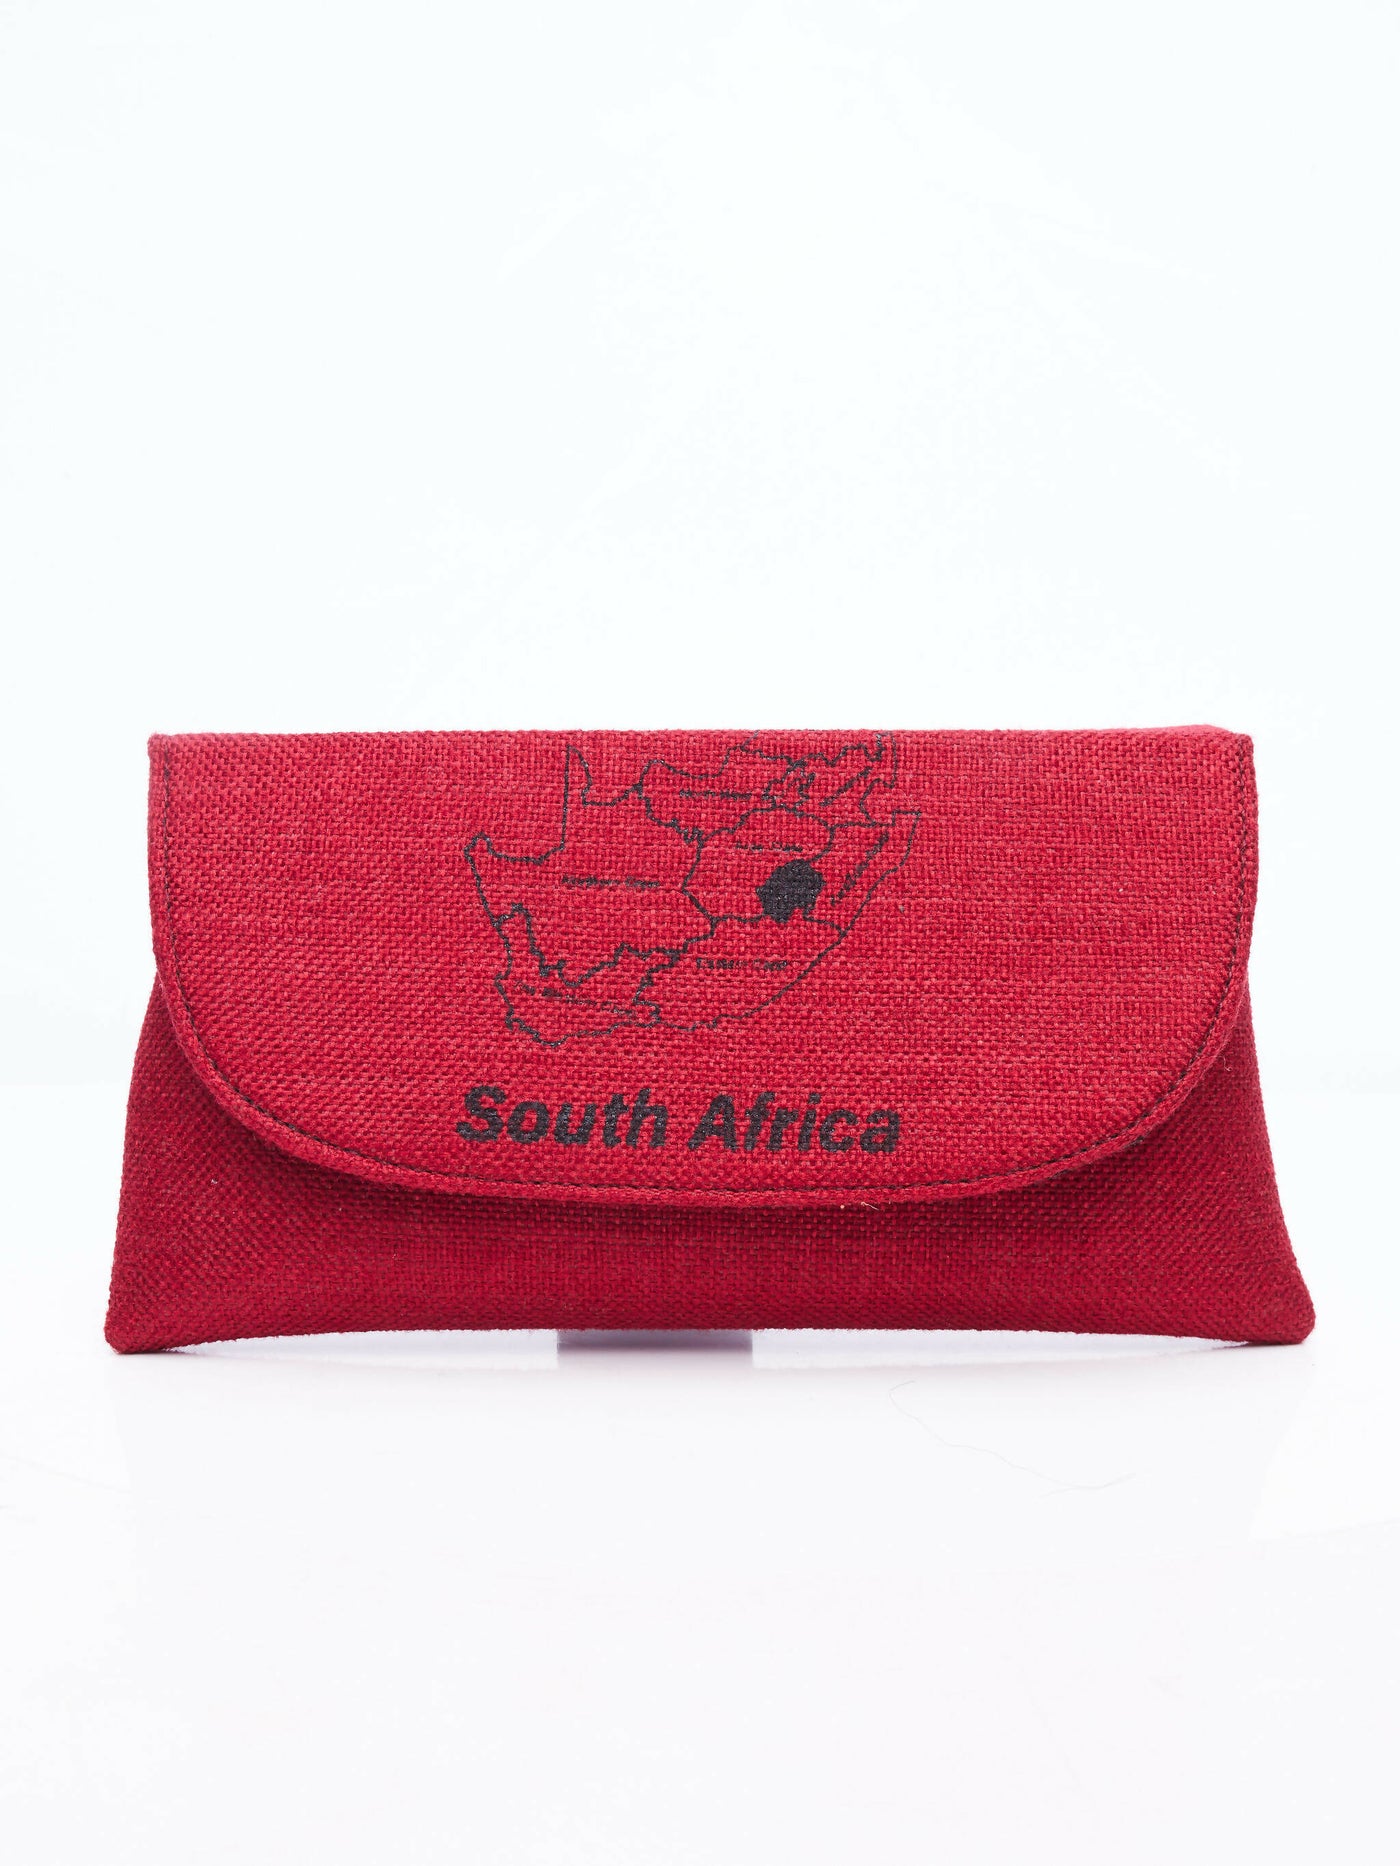 Kuldra Pineapple Spike Handbag South Africa - Maroon